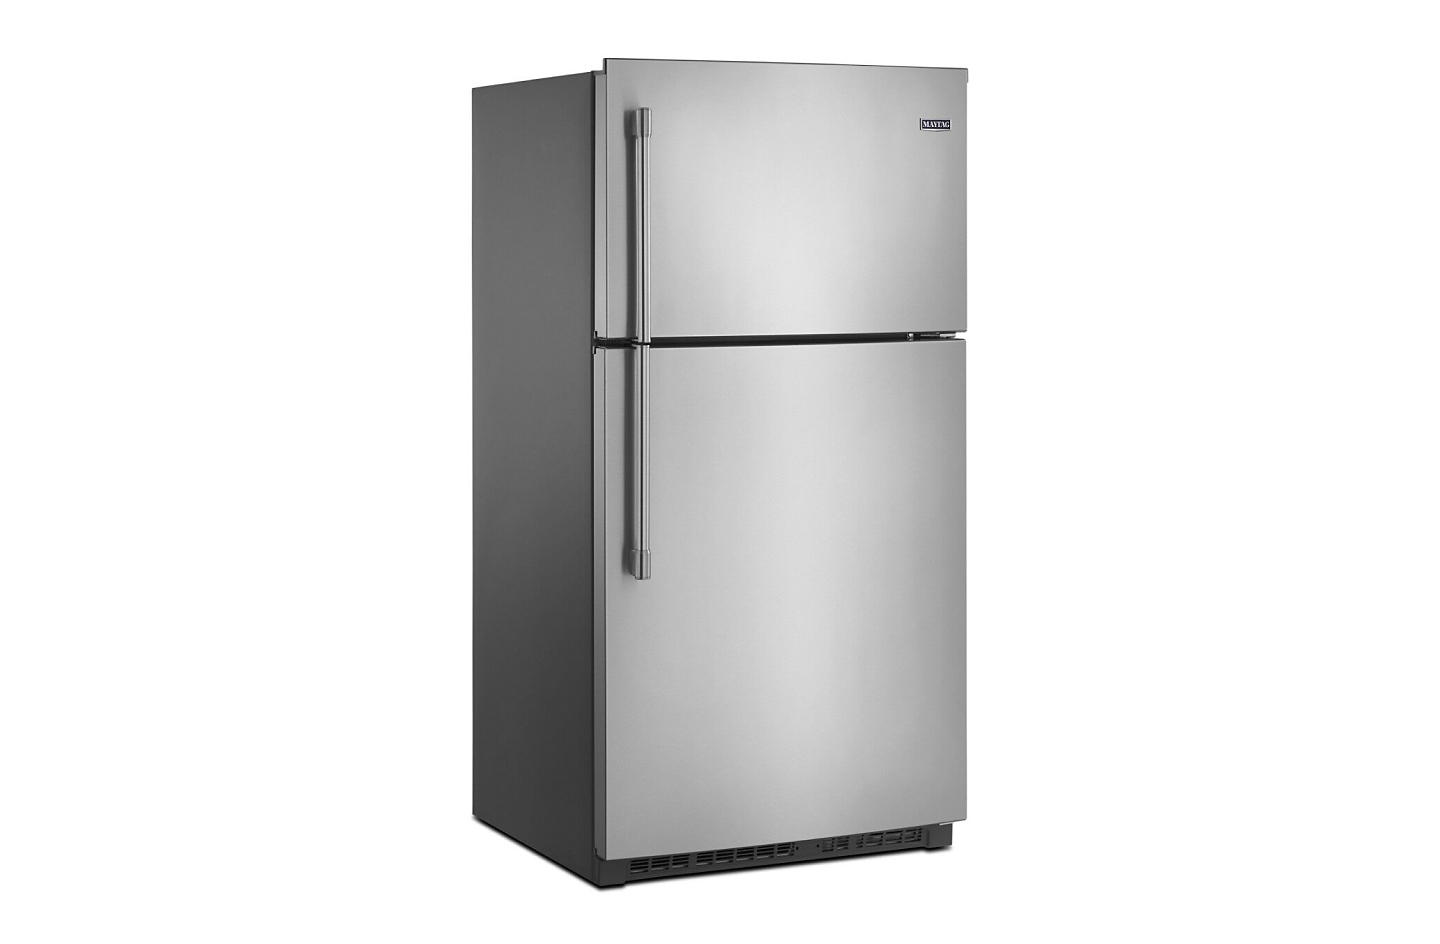 White Maytag® top freezer refrigerator